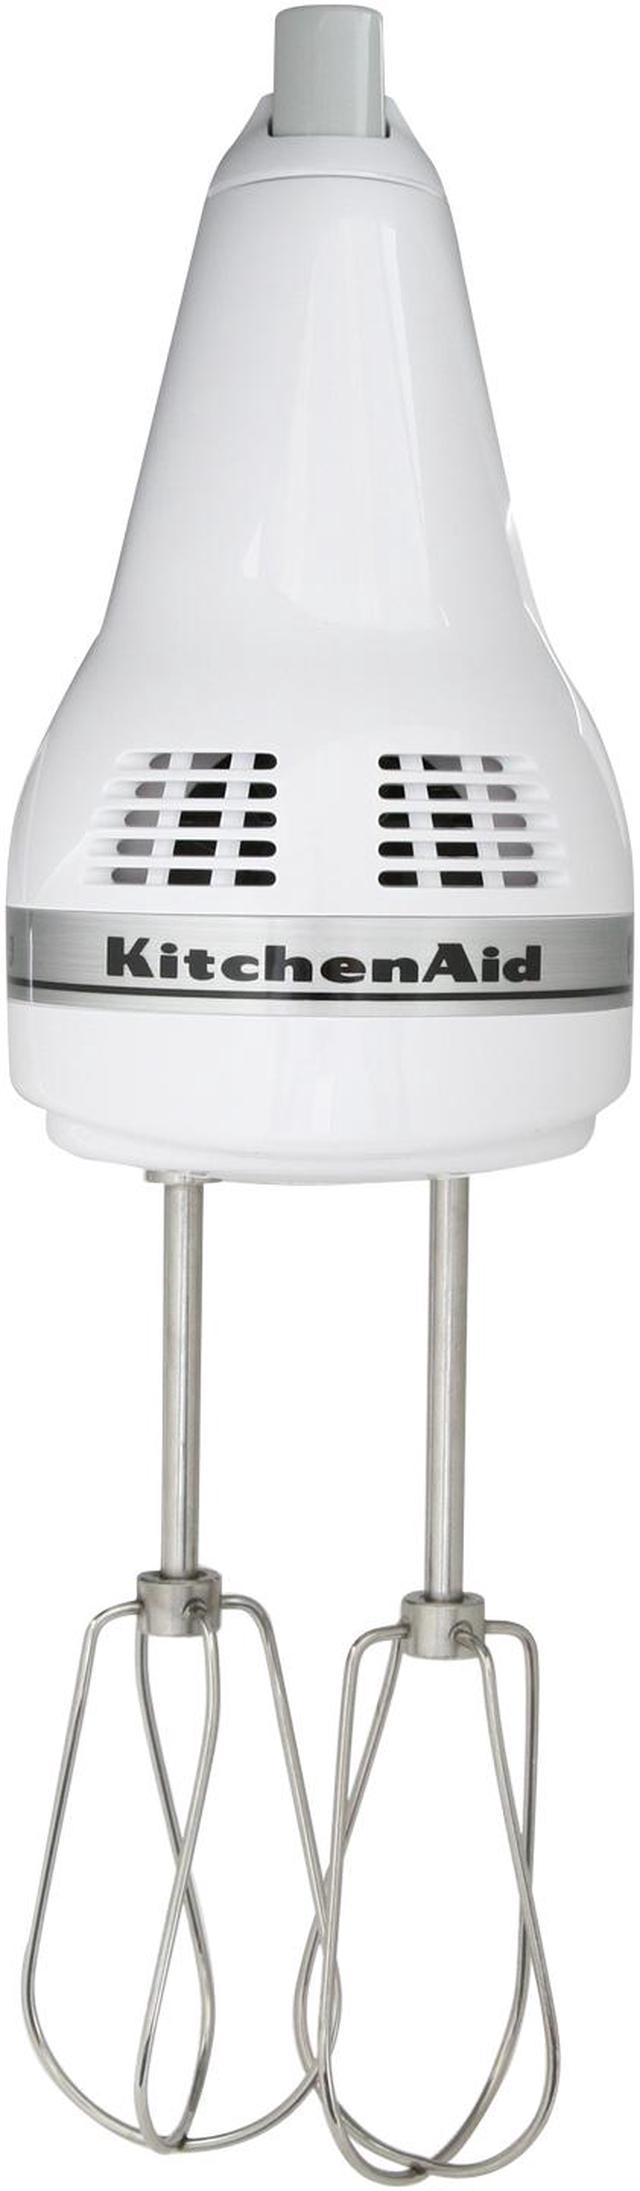 KitchenAid Ultra Power Hand Mixer 3 Speed KHM3WH-1 White Version